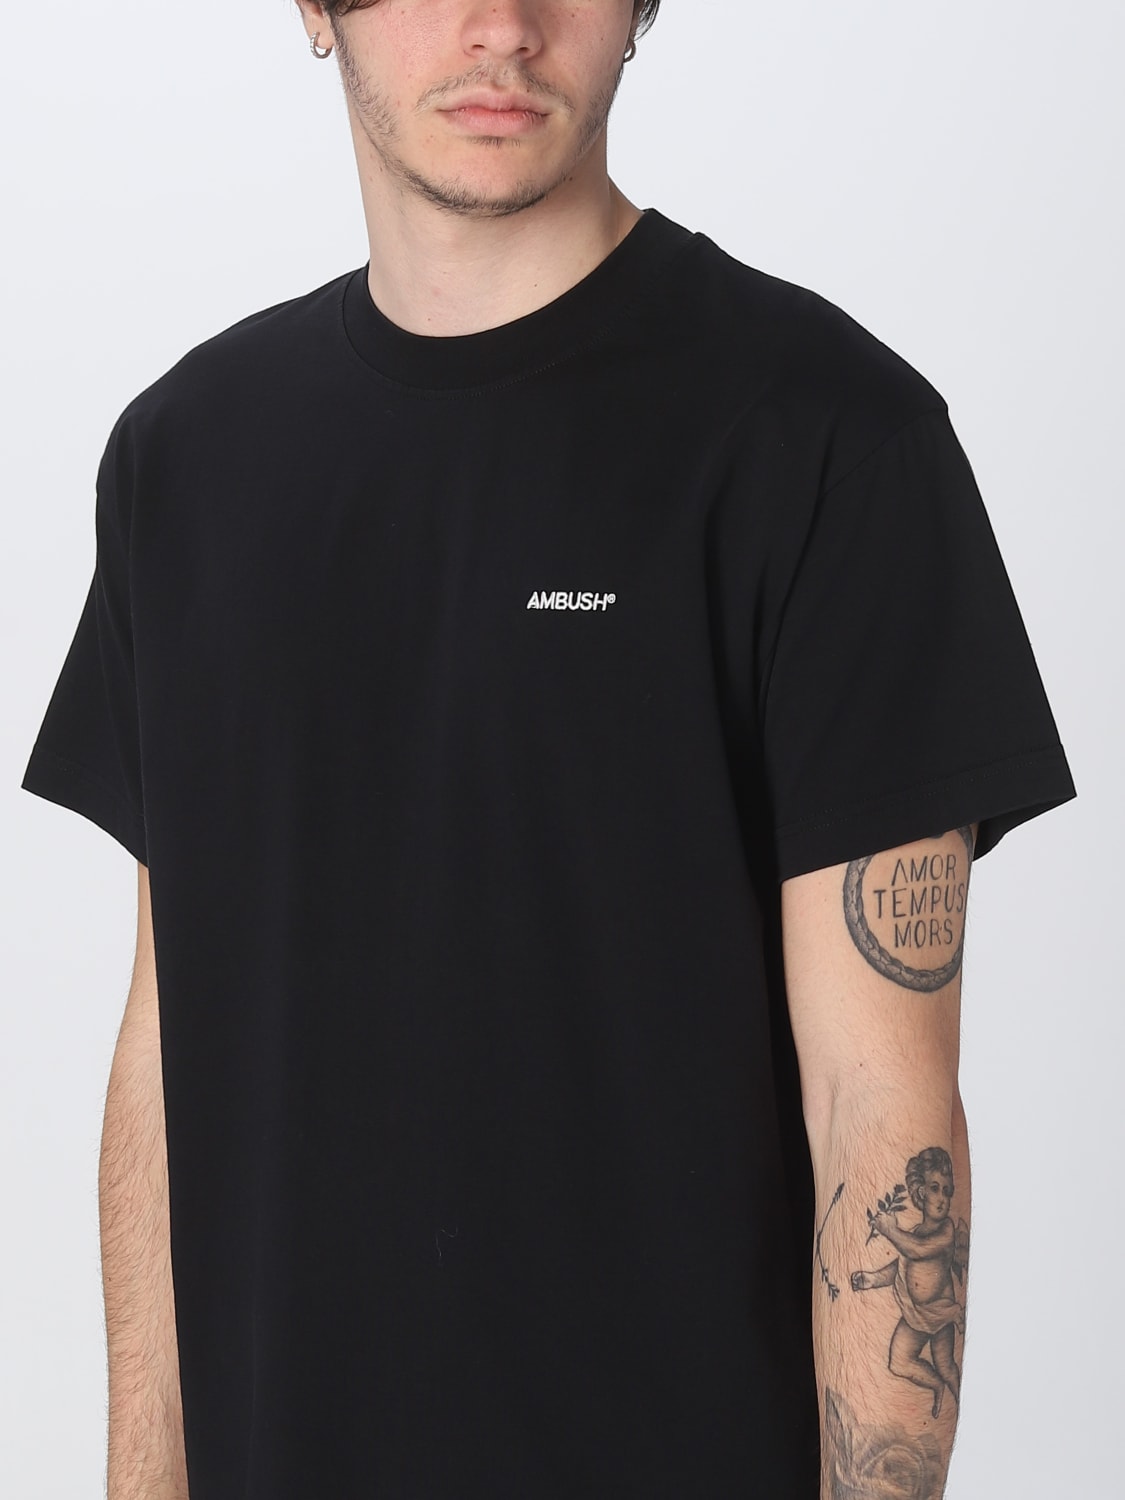 Ambush Outlet: t-shirt for man - Black | Ambush t-shirt